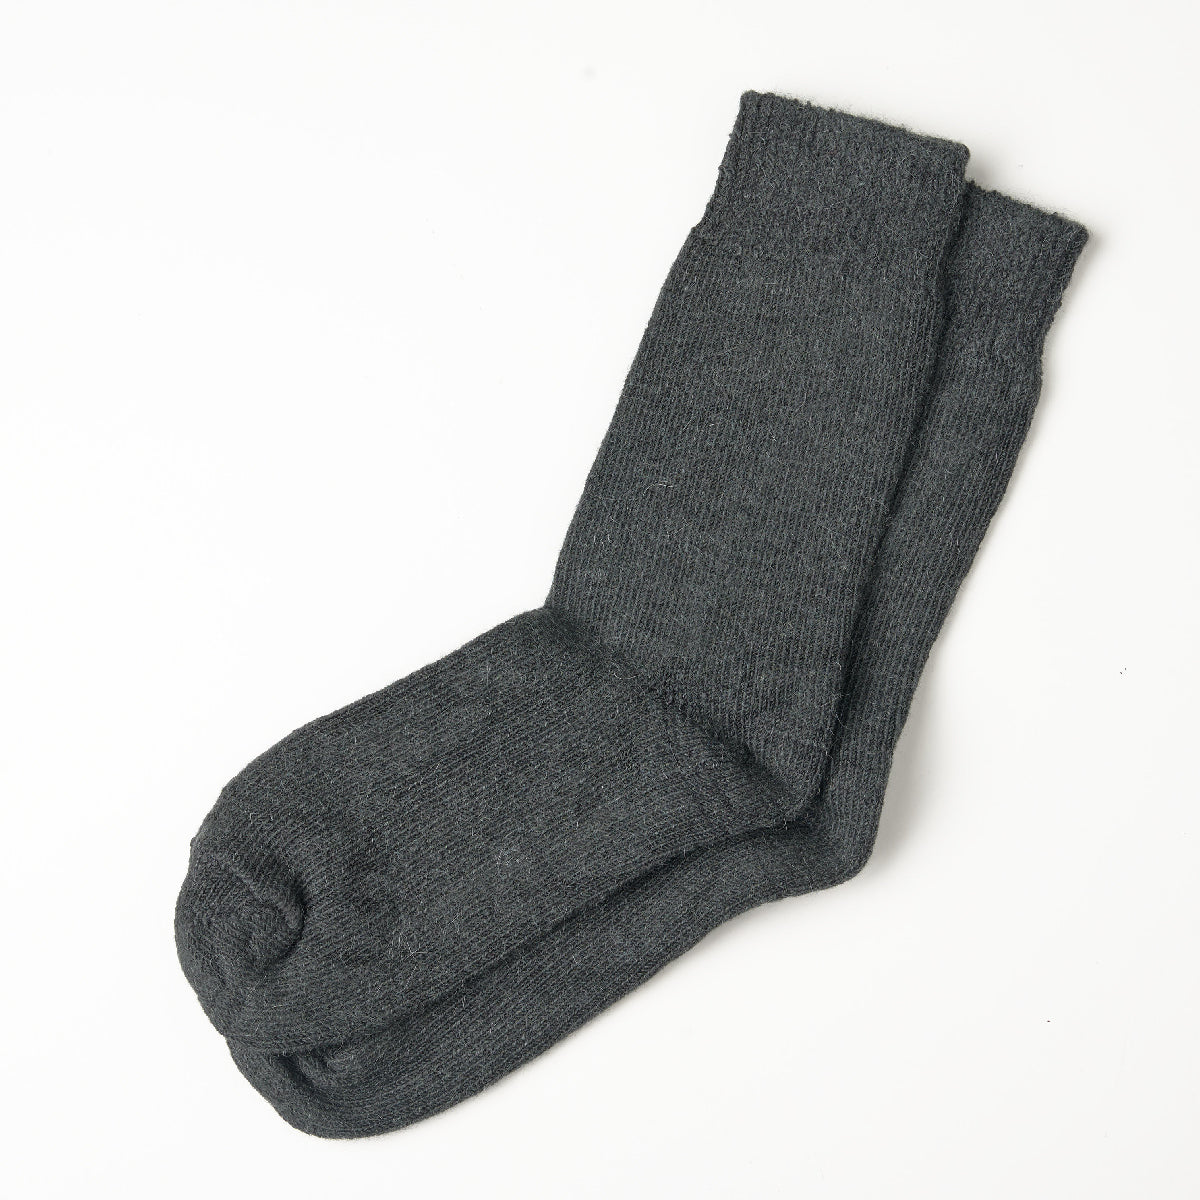 Alpaca Socks Plain Knit - 3 Pack